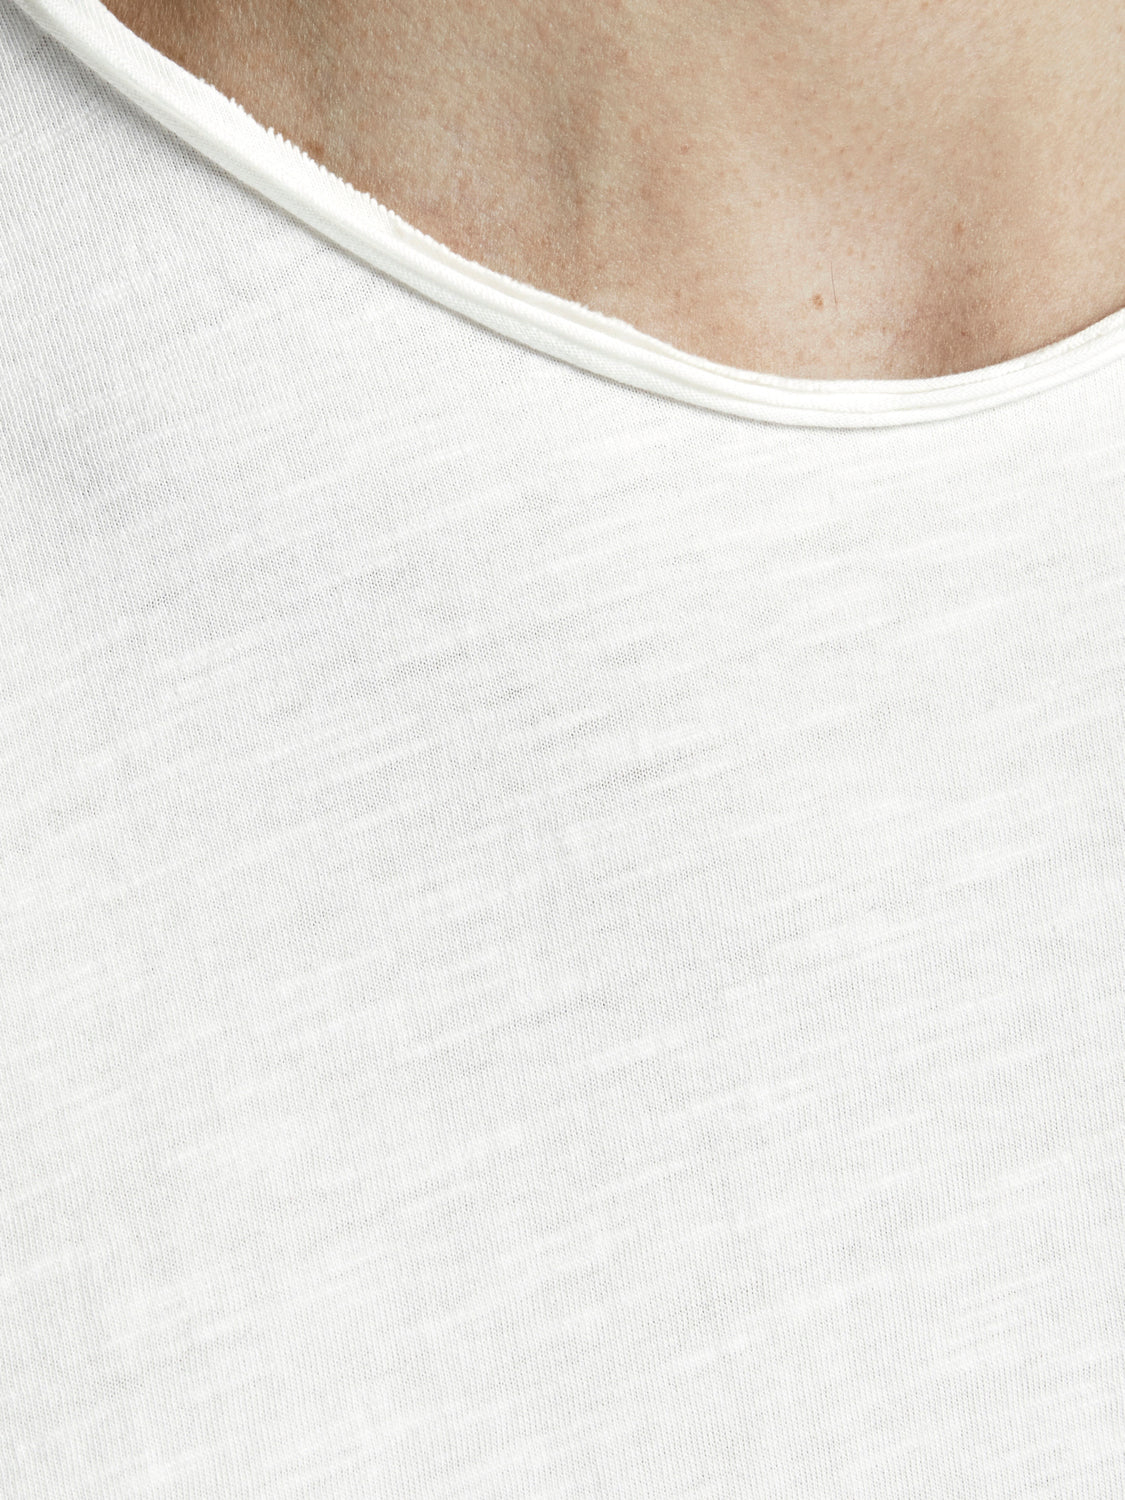 Camiseta básica de manga corta blanca - JJEBASHER